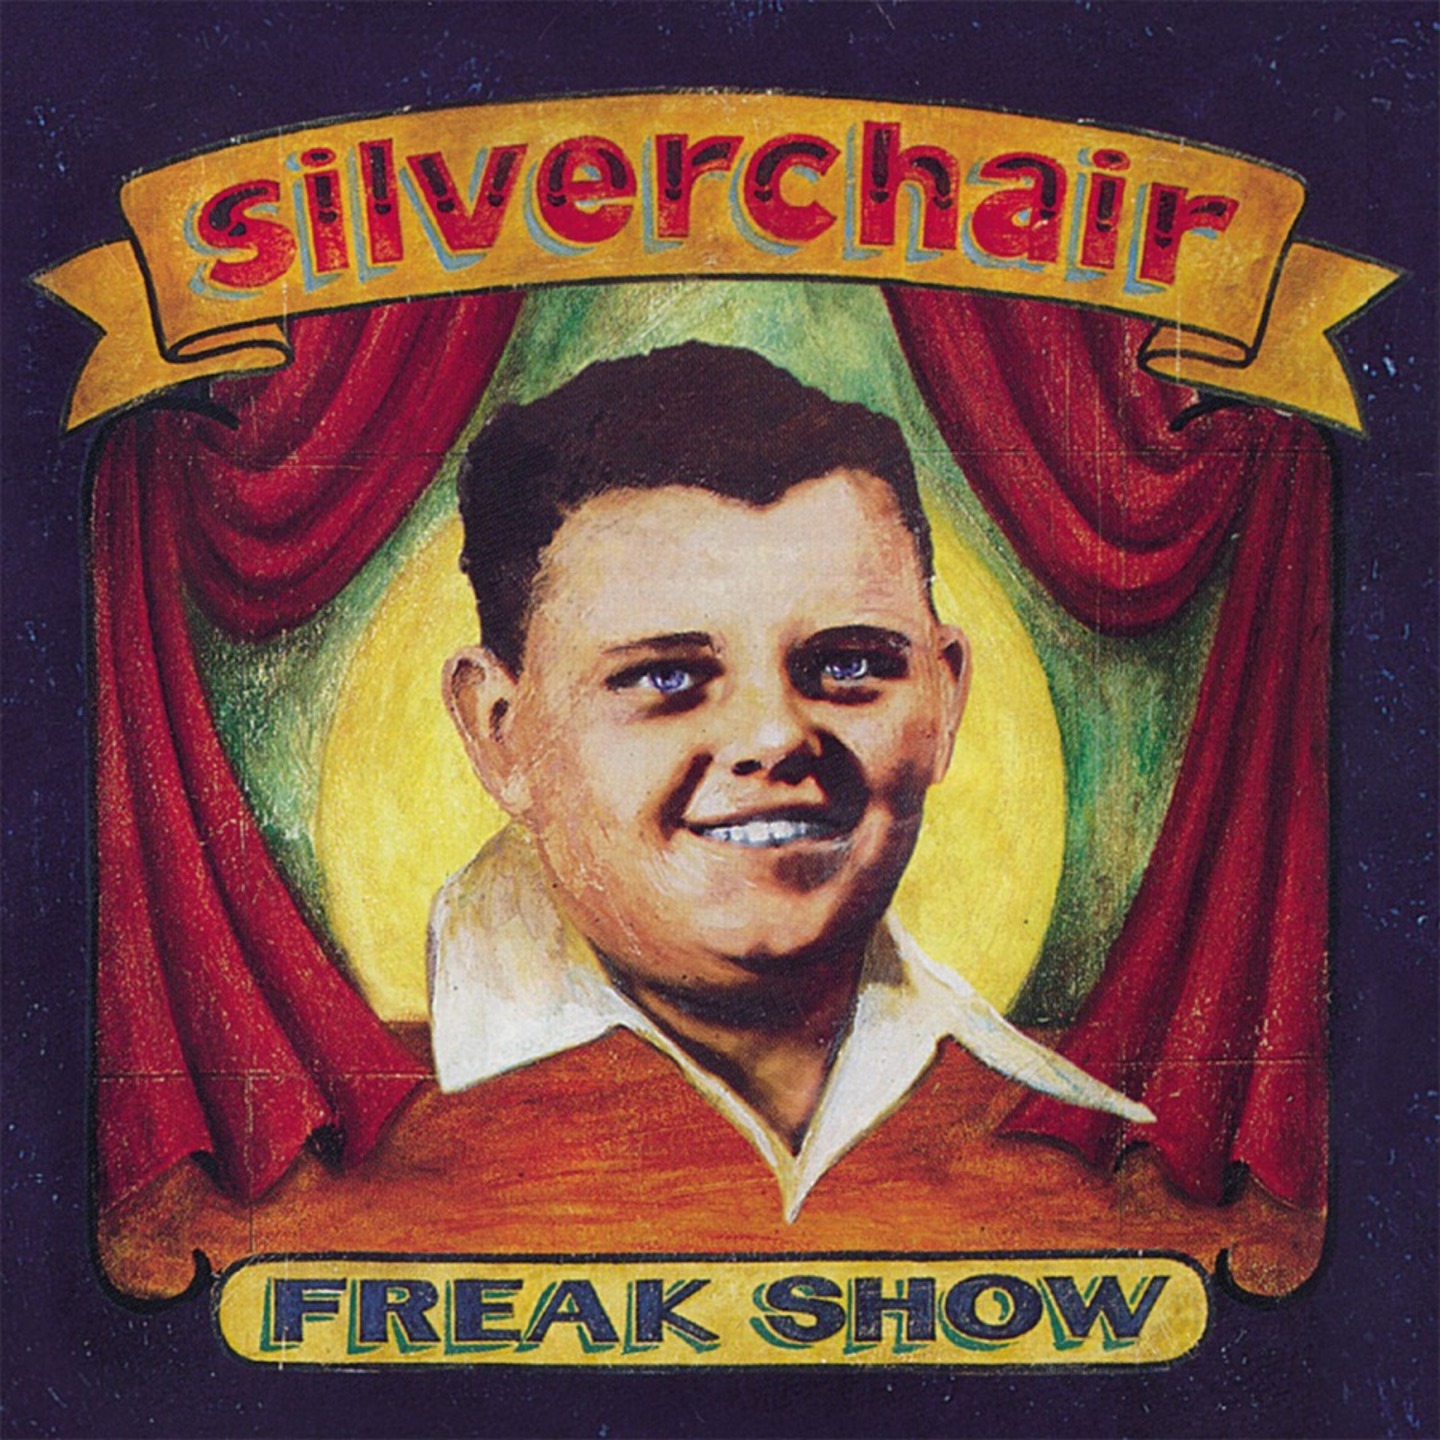 SILVERCHAIR - Freak Show LP Limited Edition Yellow & Blue Marbled Vinyl